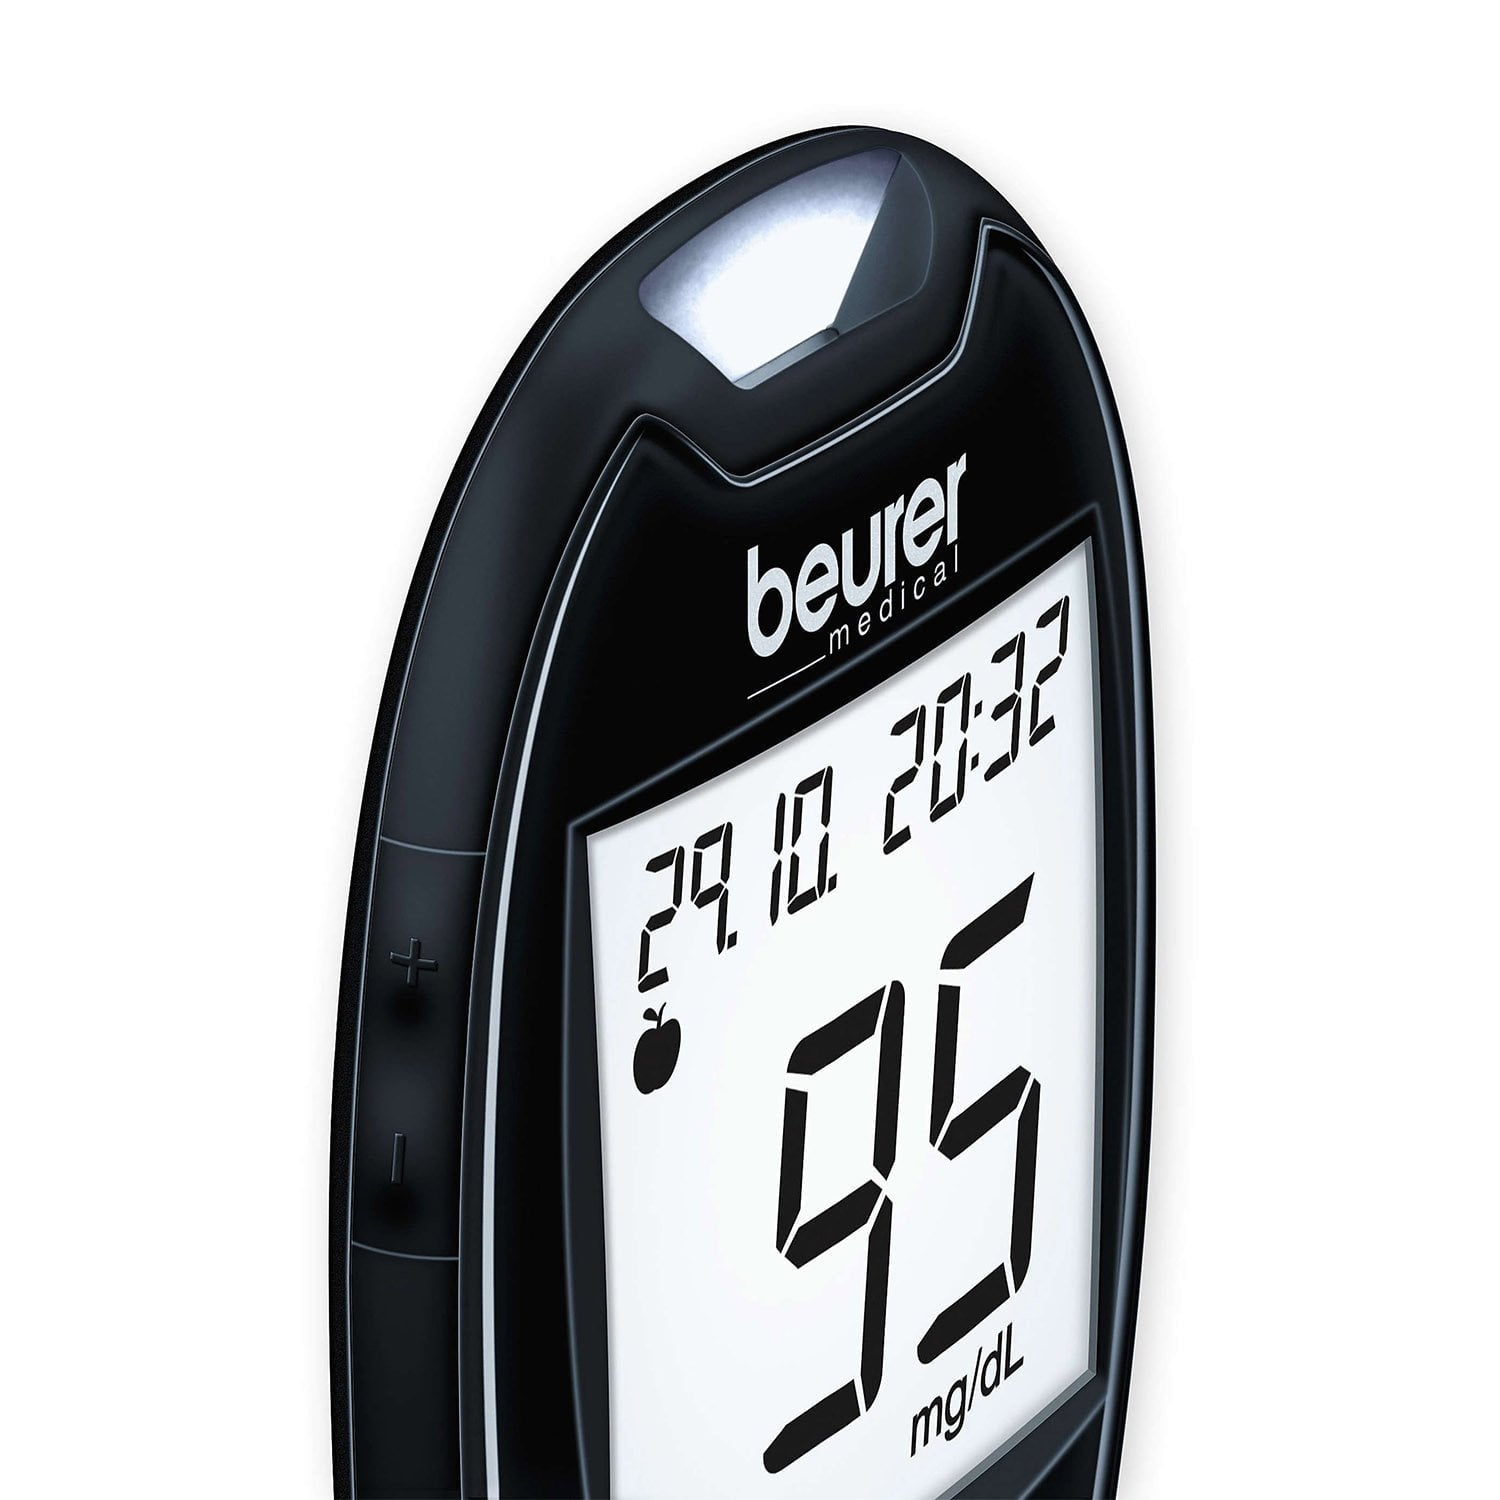 Beurer Diabetes Blood Glucose Monitor GL 44